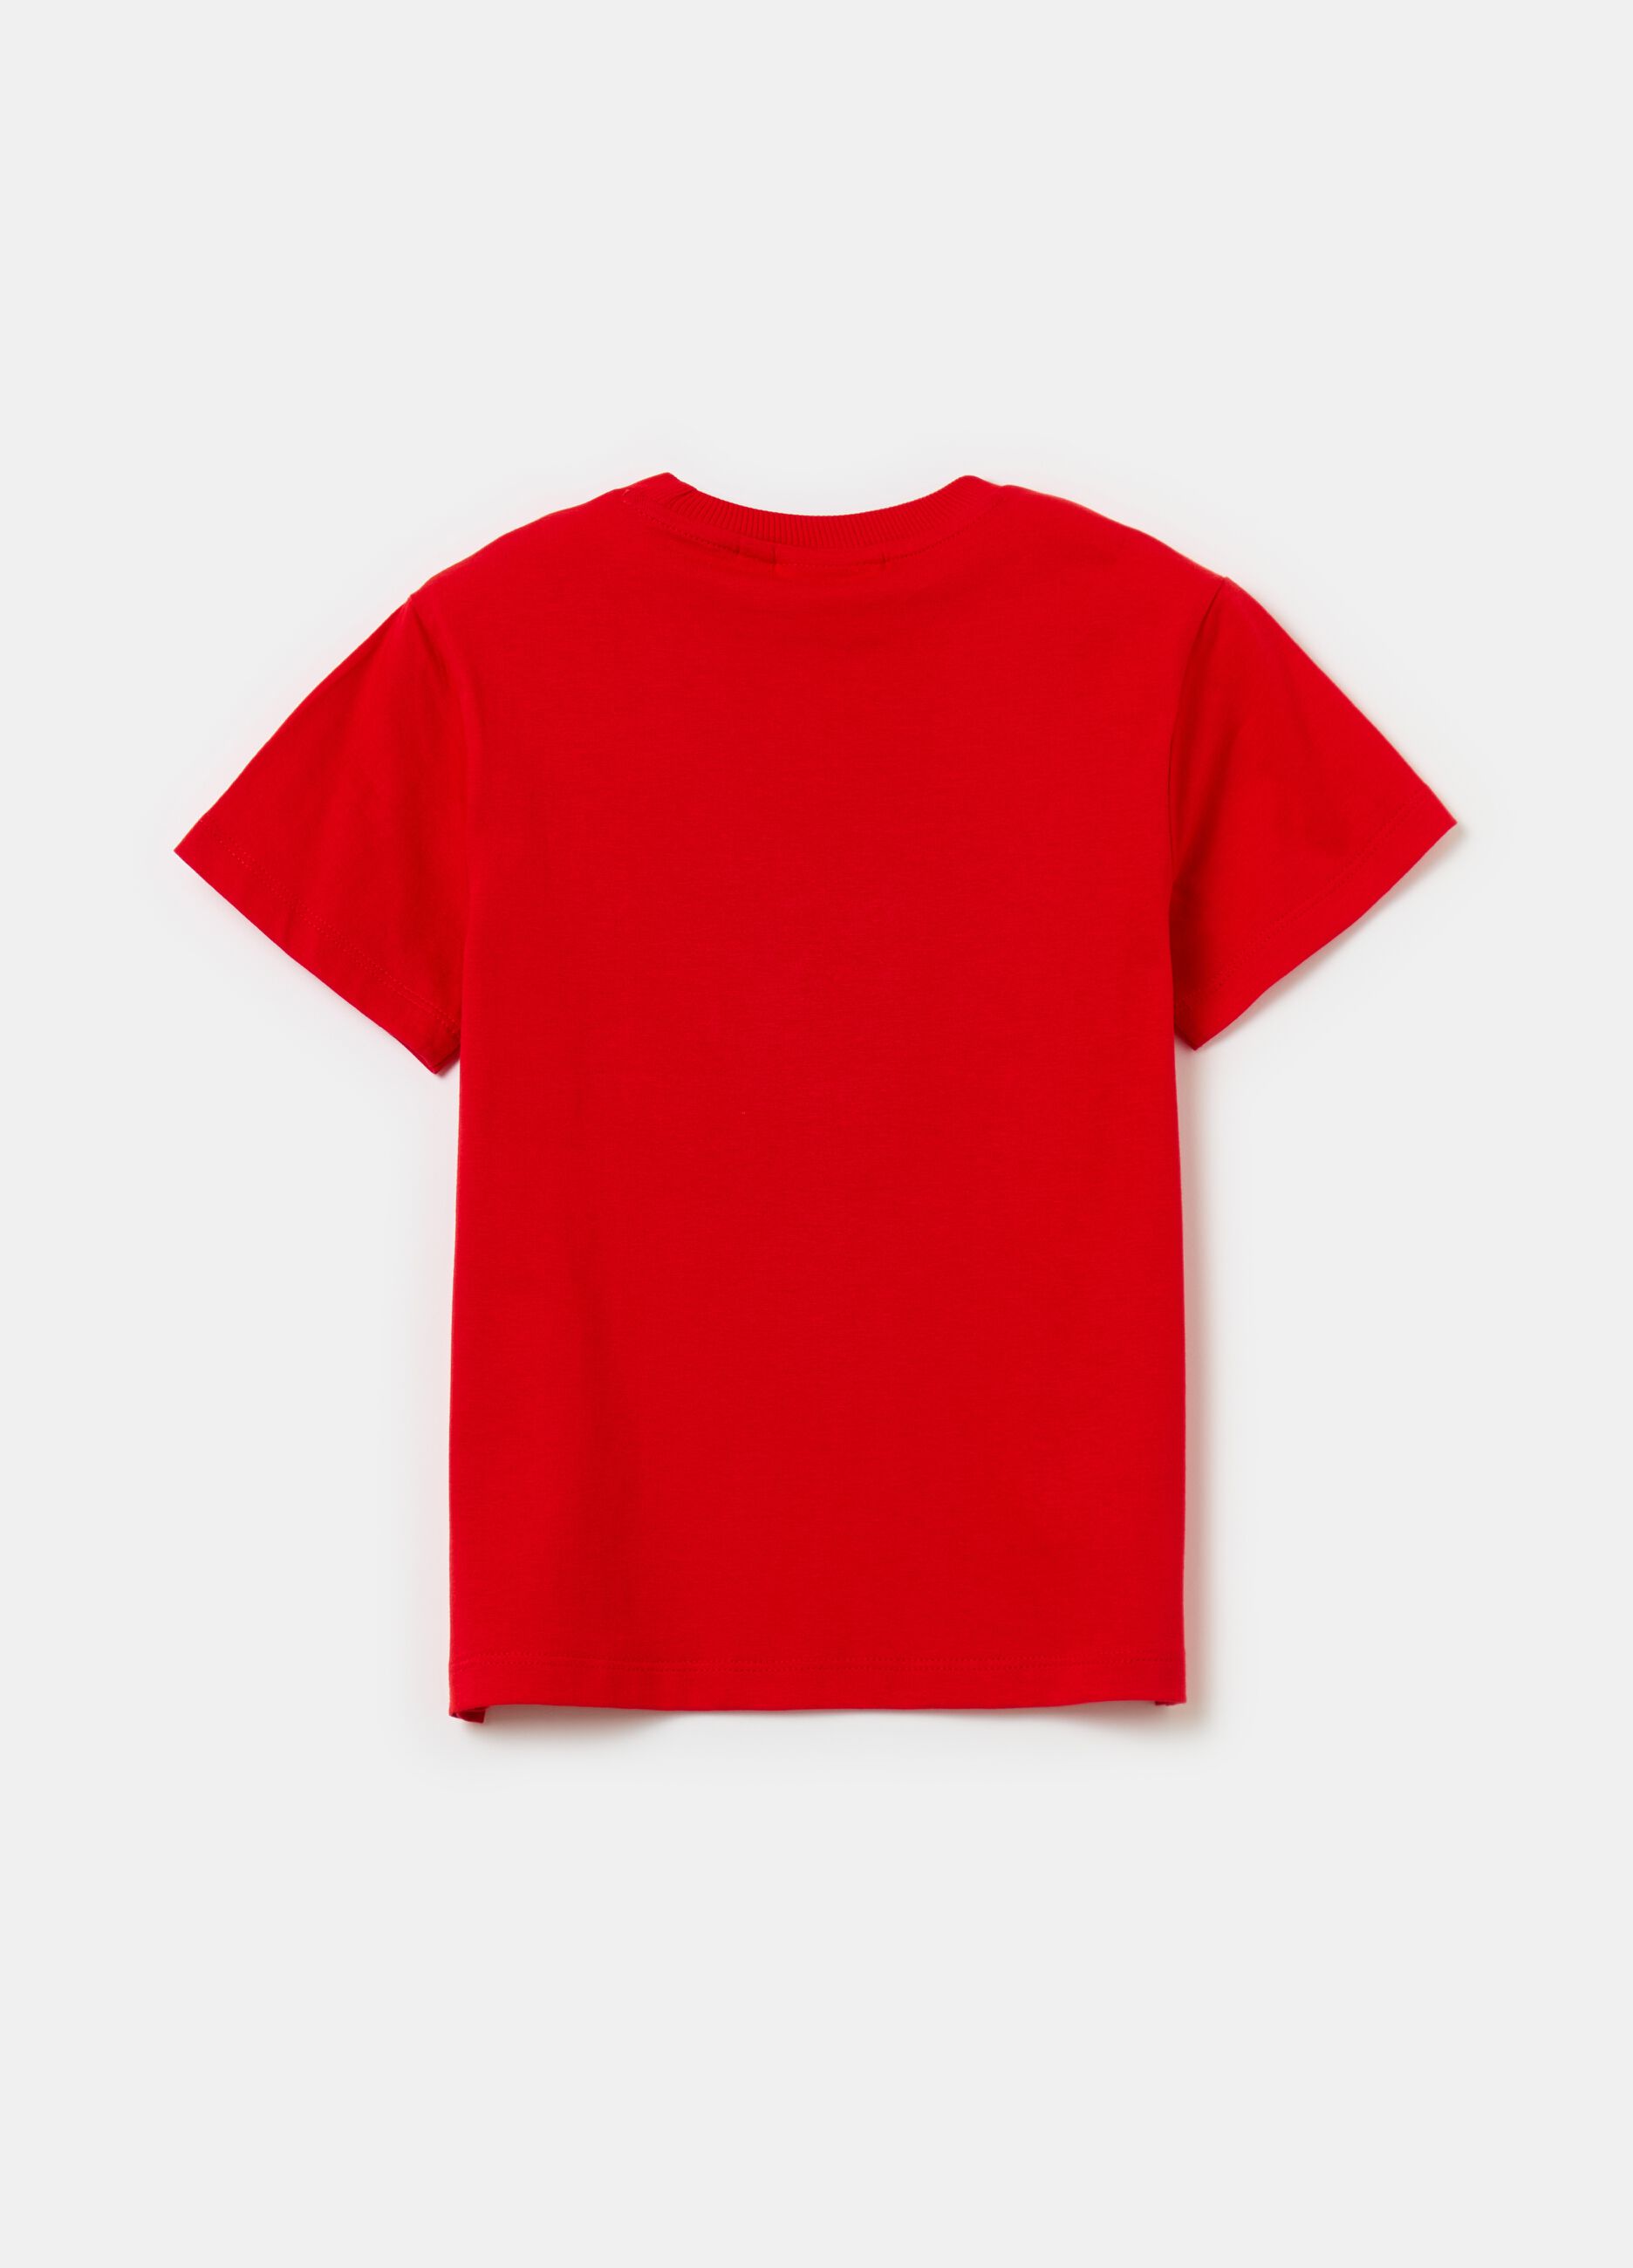 Cotton T-shirt with Yoshi print